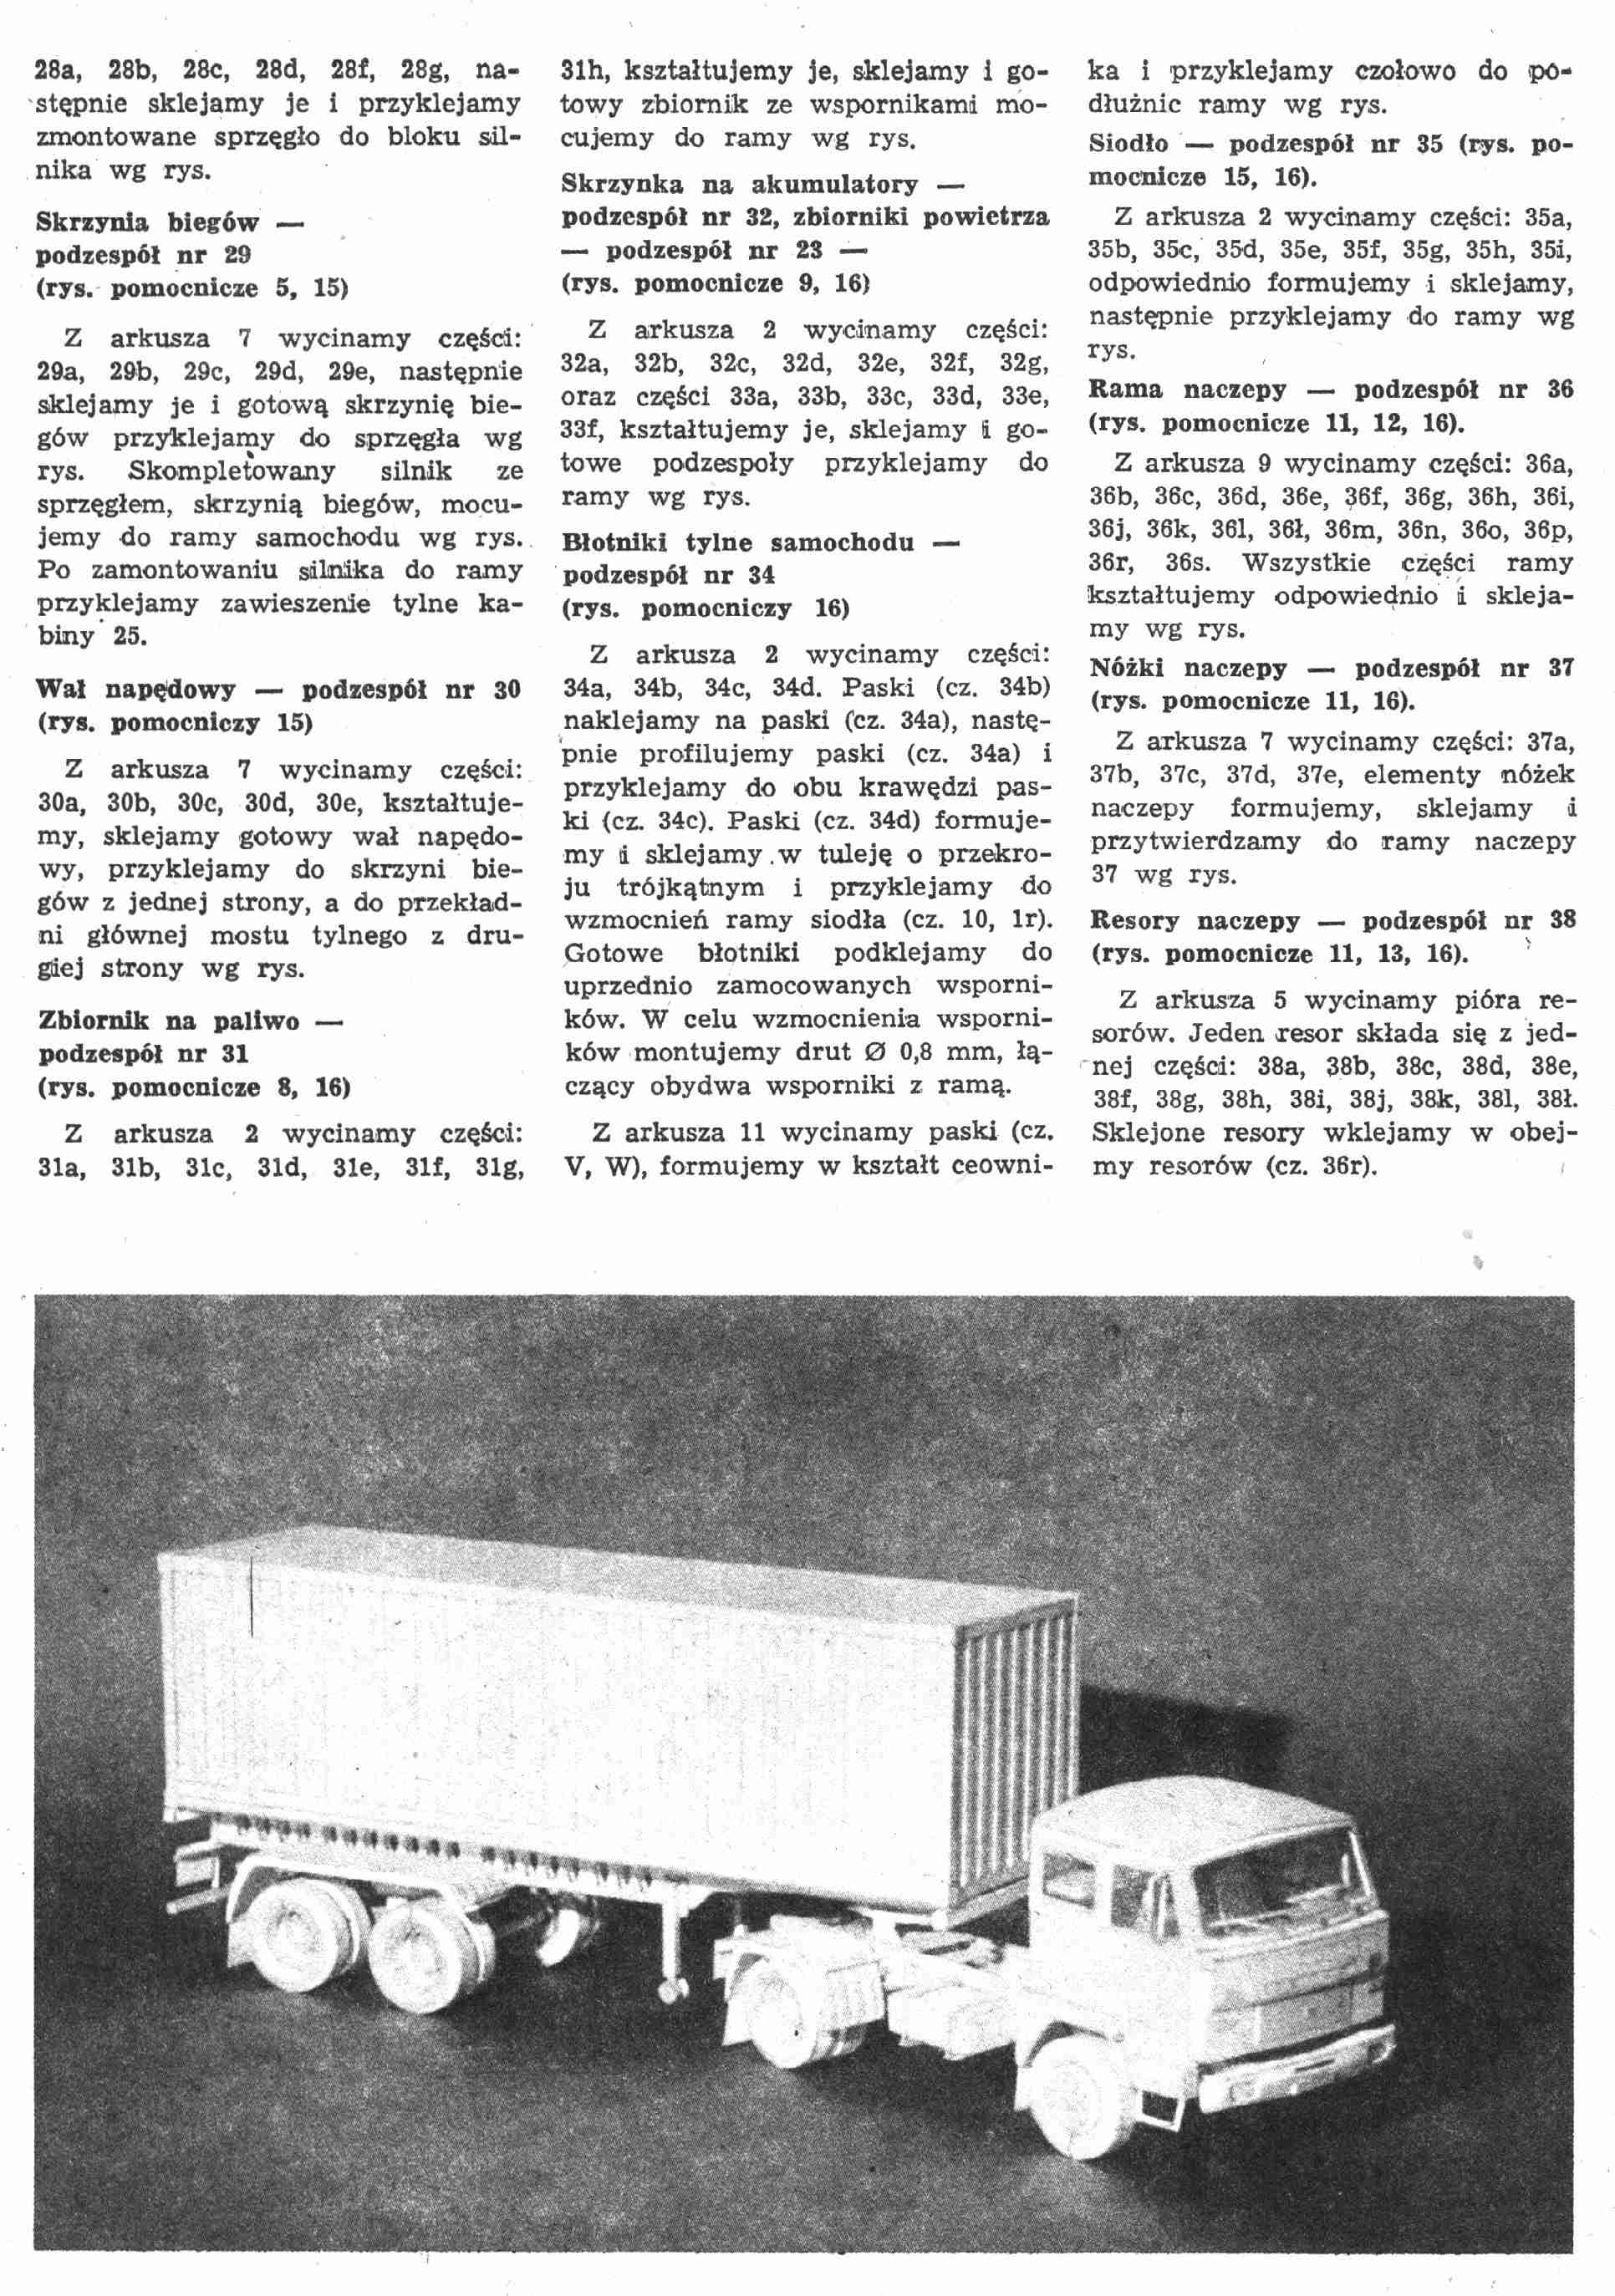 "Maly Modelarz" 11-12, 1976, 11 с.